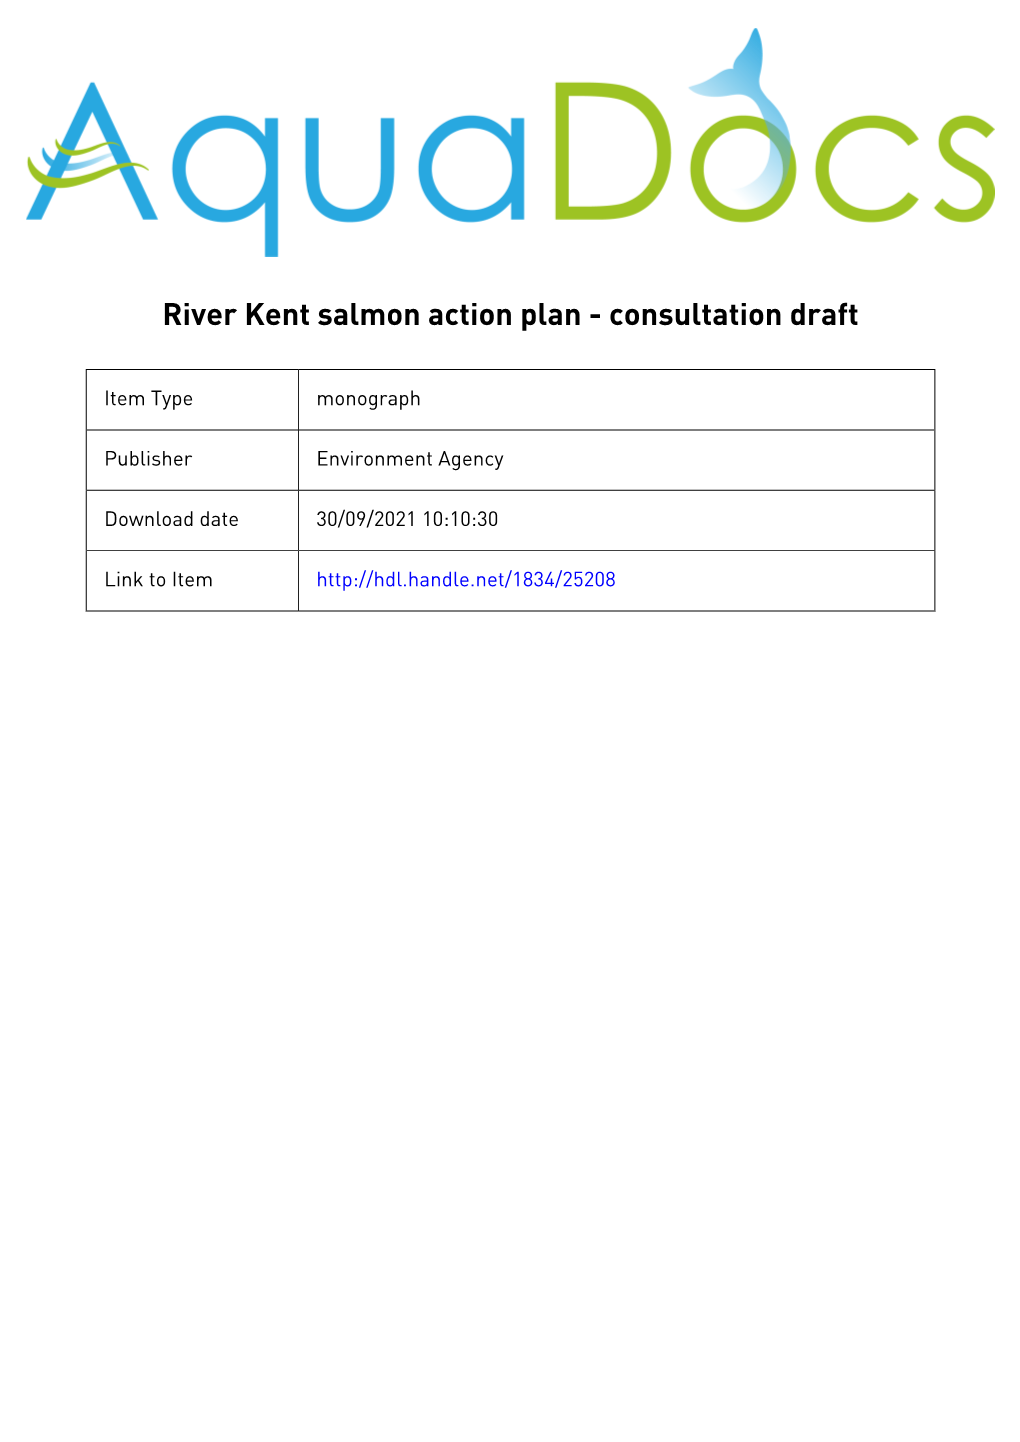 Salmon Action Plan - Consultation Draft